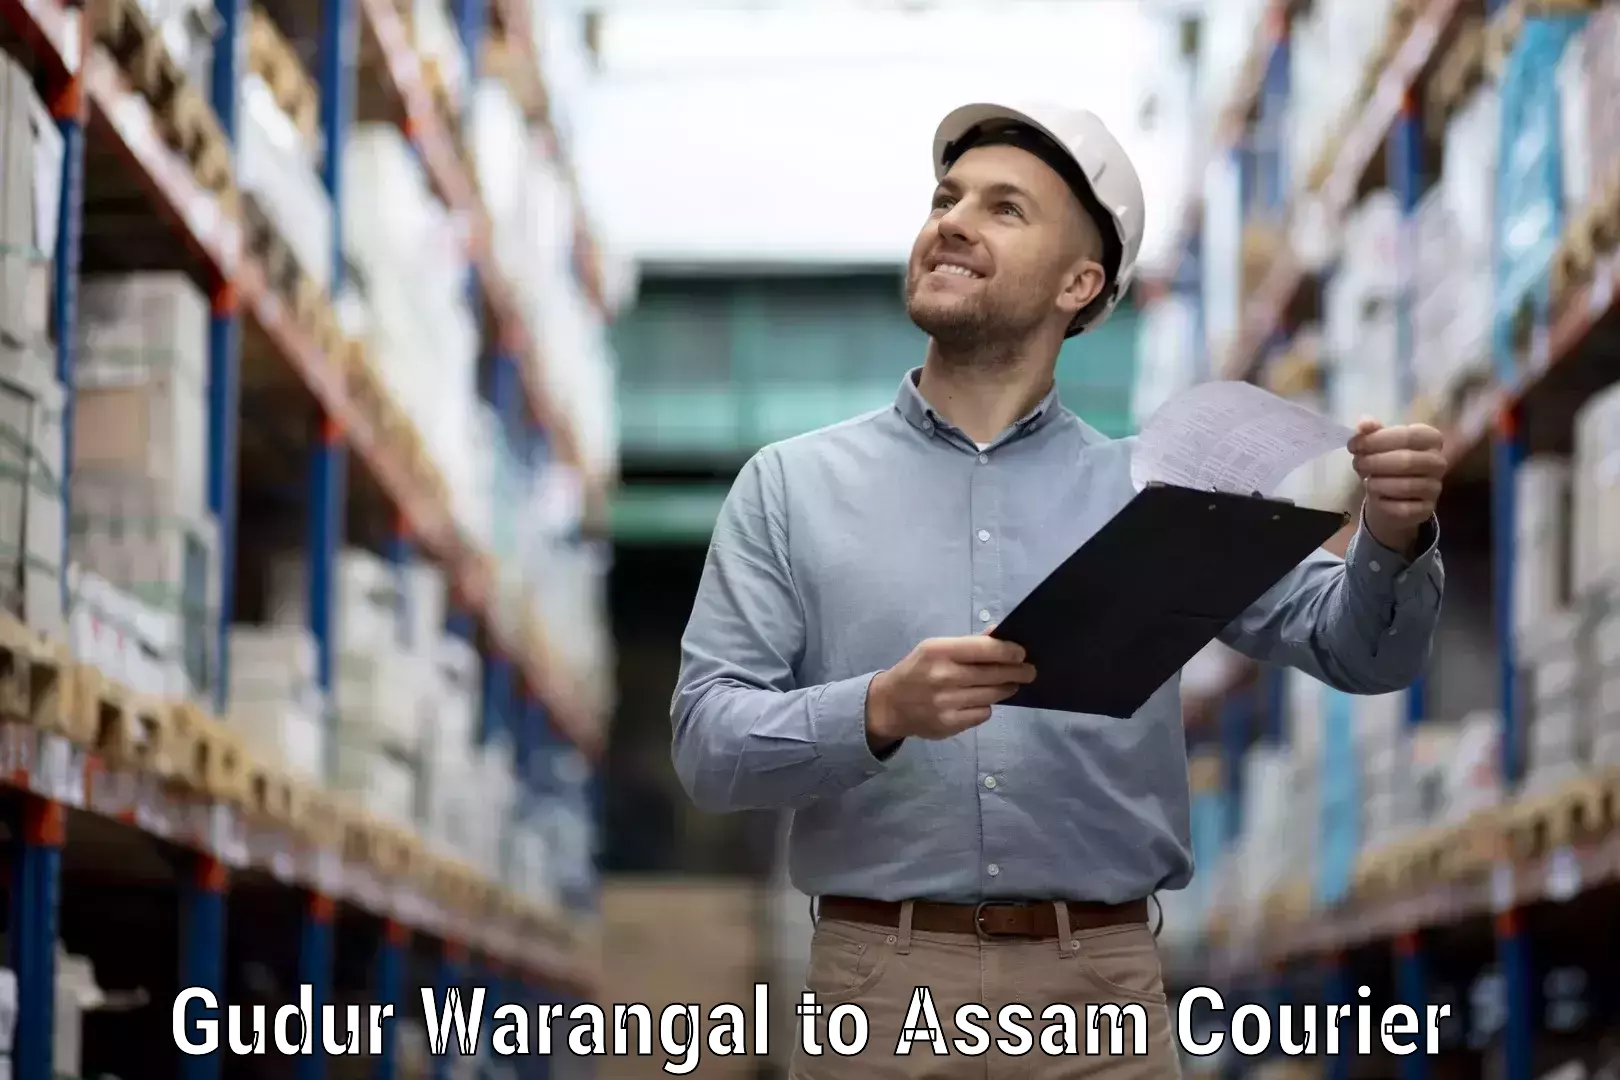 Enhanced tracking features Gudur Warangal to Lala Assam